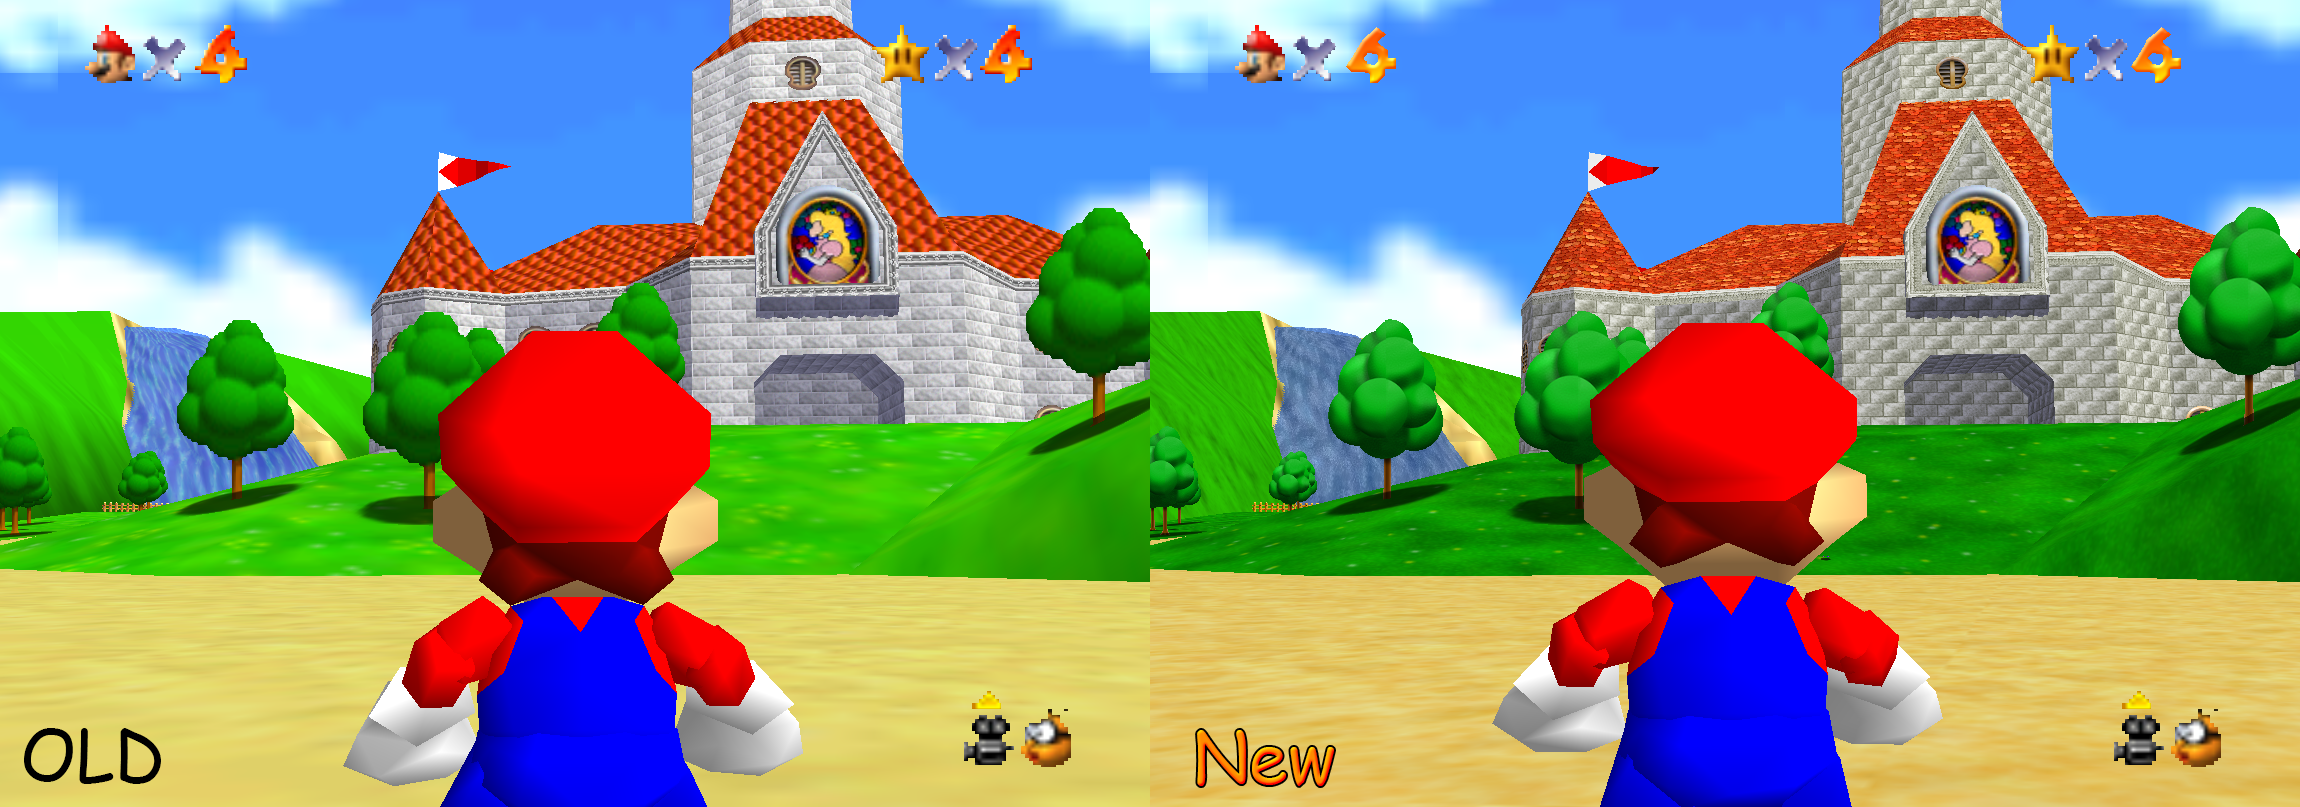 Top Super Mario 64 Backgrounds Wallpapers